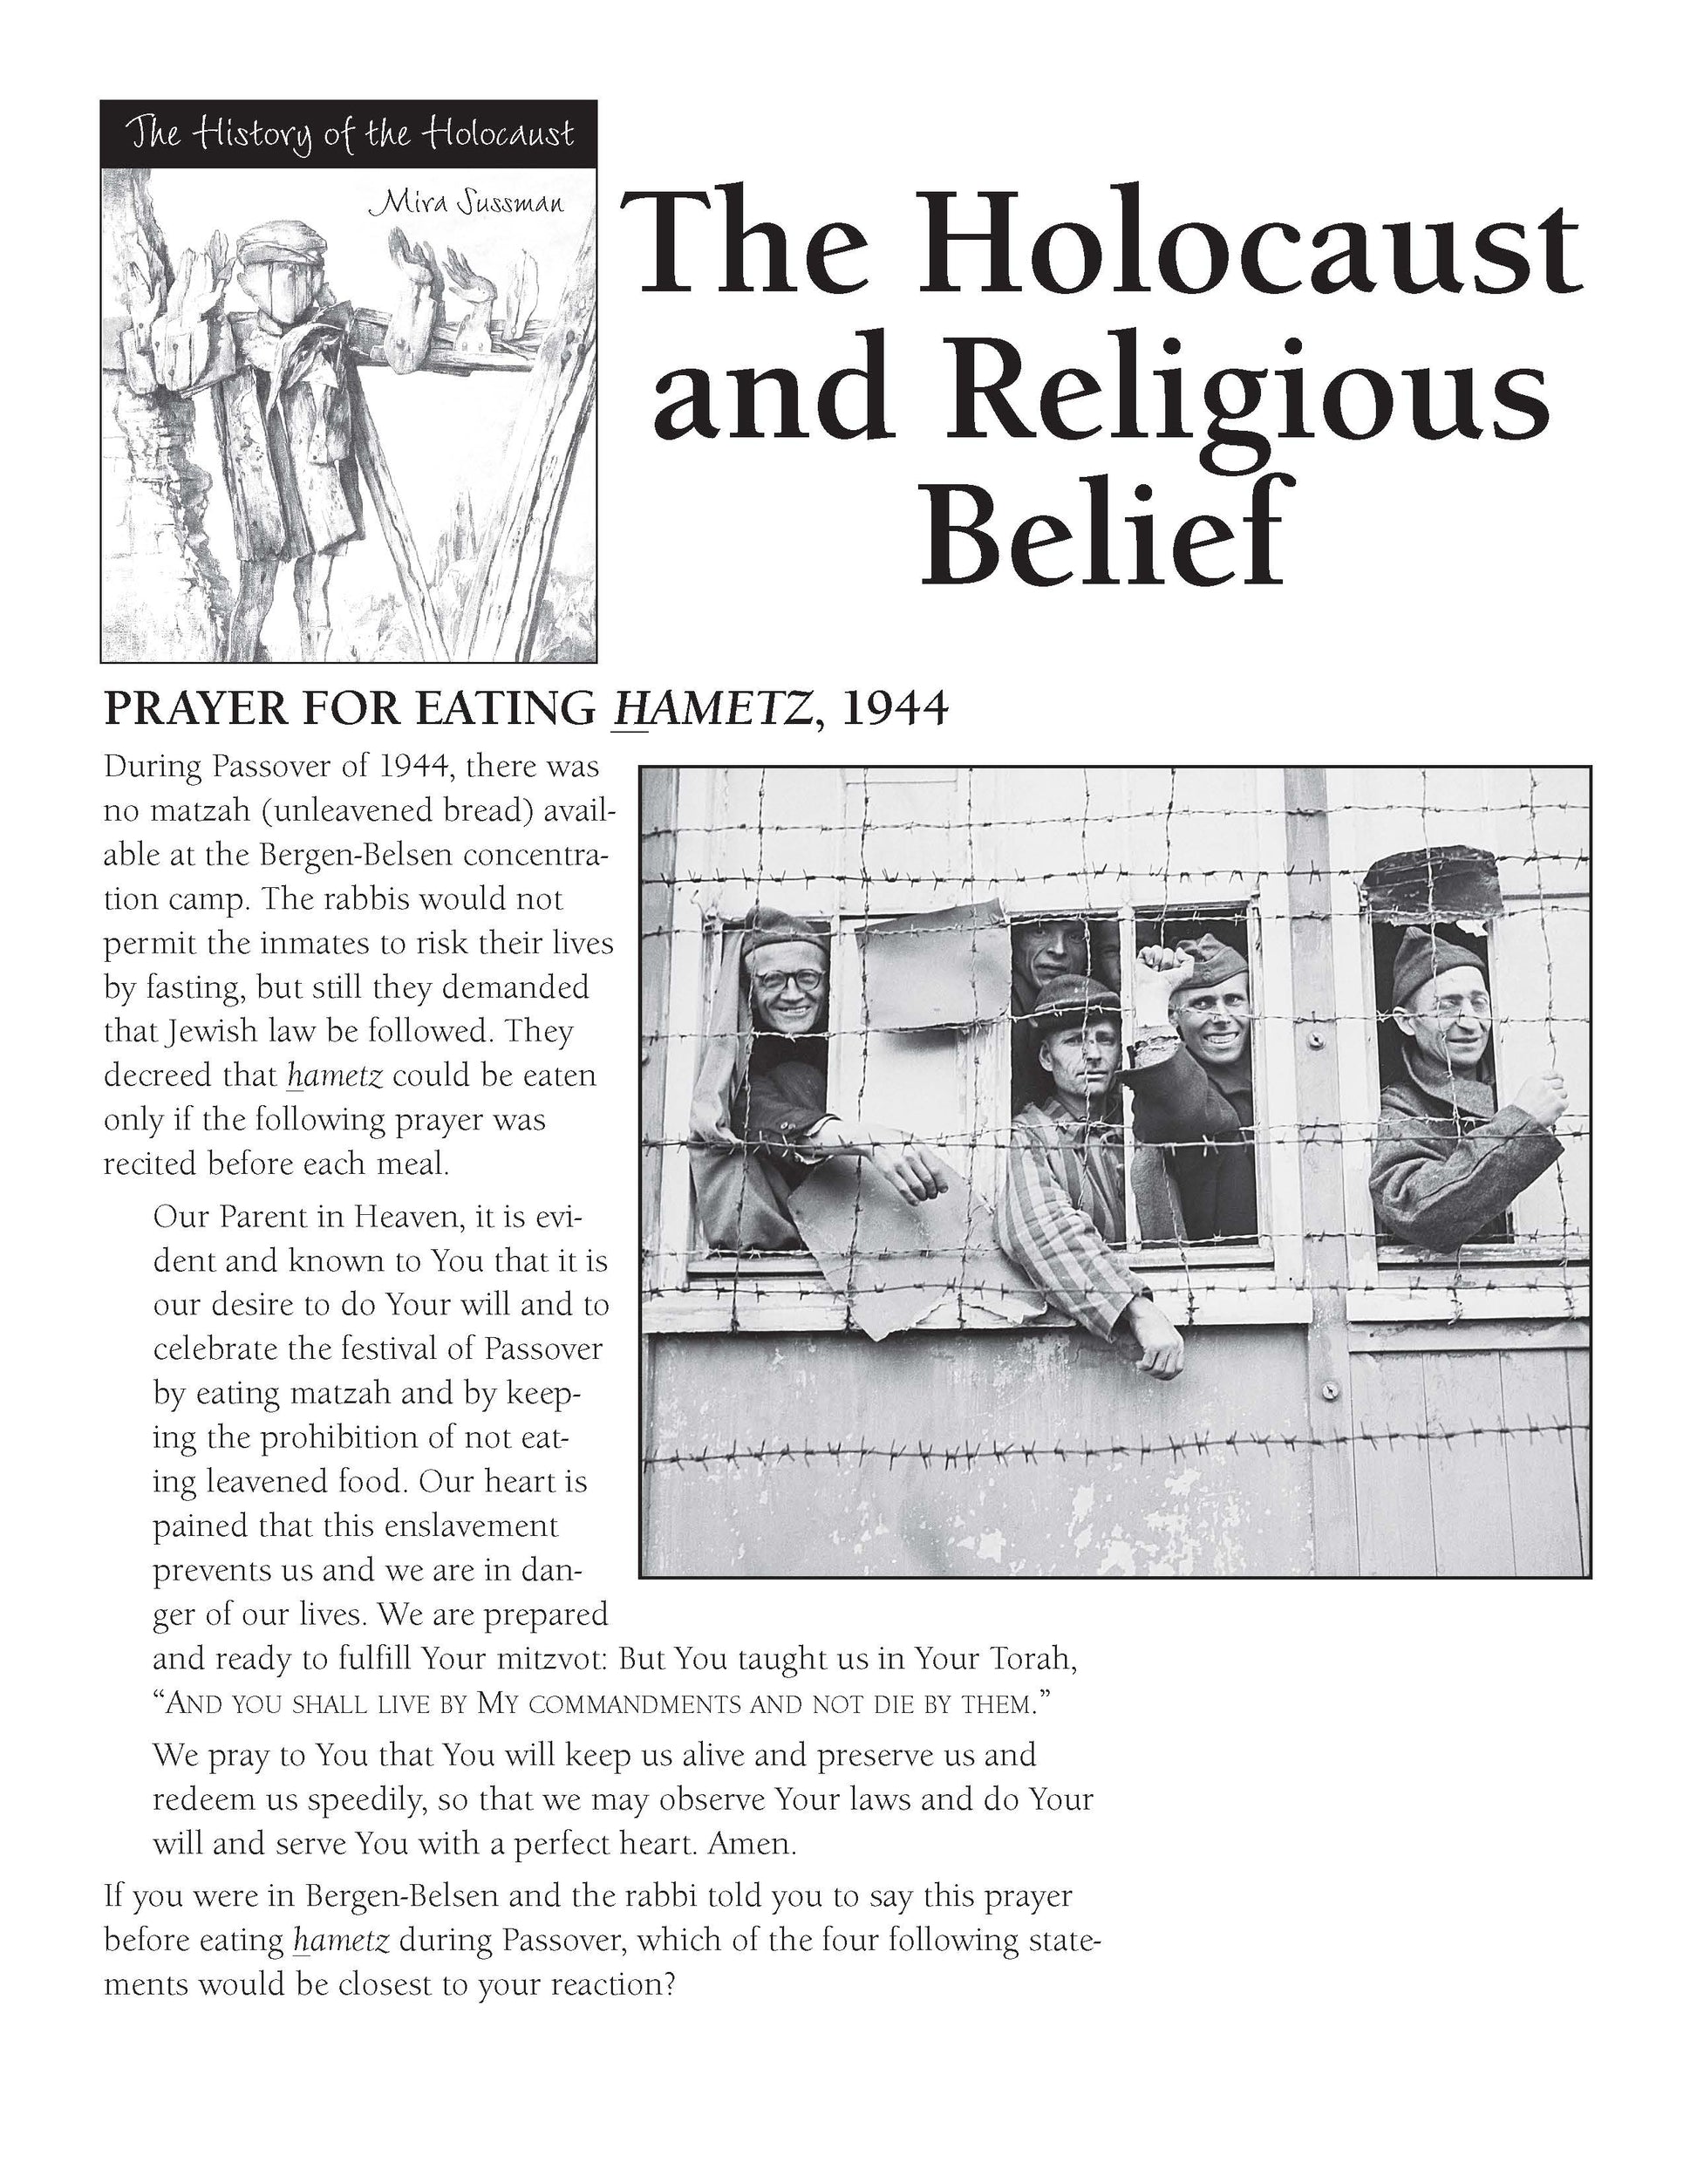 History of the Holocaust: Holocaust & Religious Belief